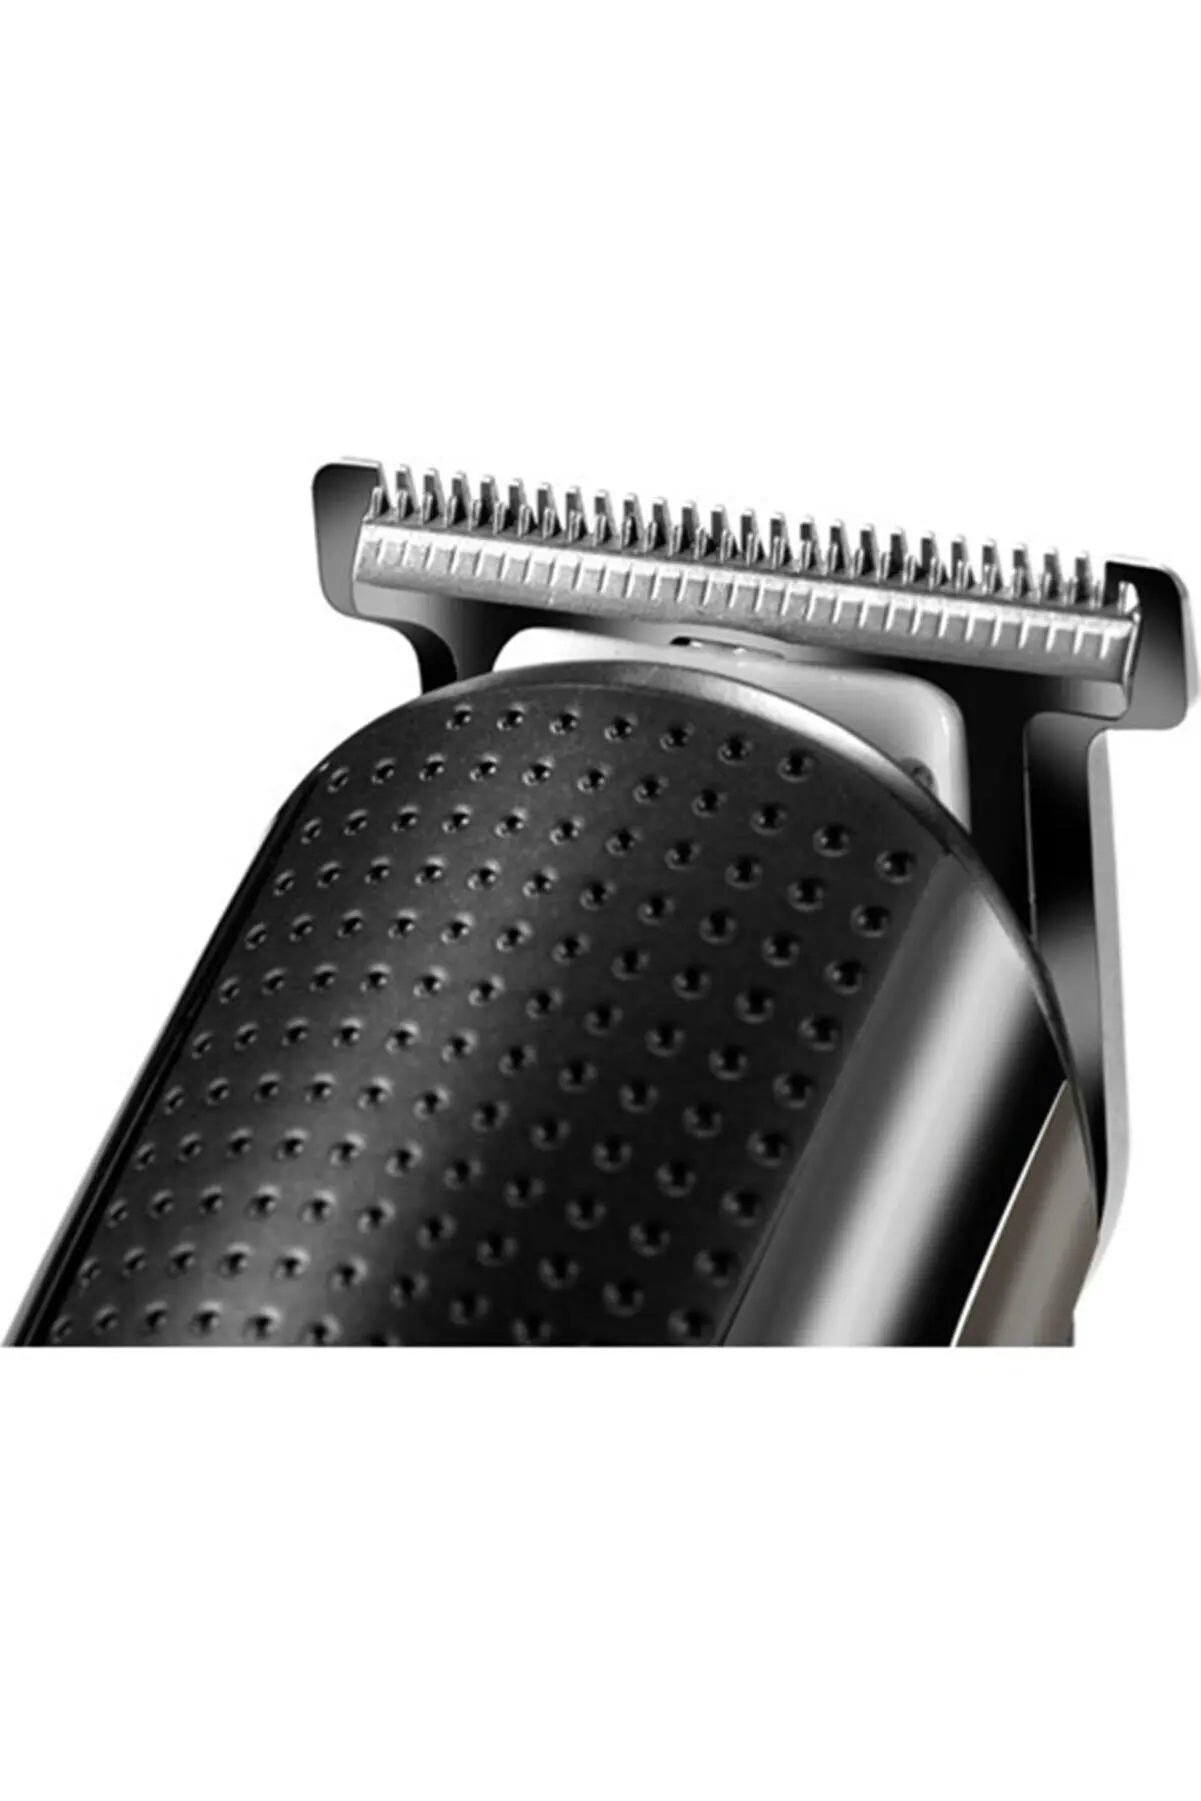 Gm-8101 12 iN 1 Electric Shavers Hair Trimmer Barber Hair Clipper Cordless Hair Cutting Machine Beard Men Razors enlarge